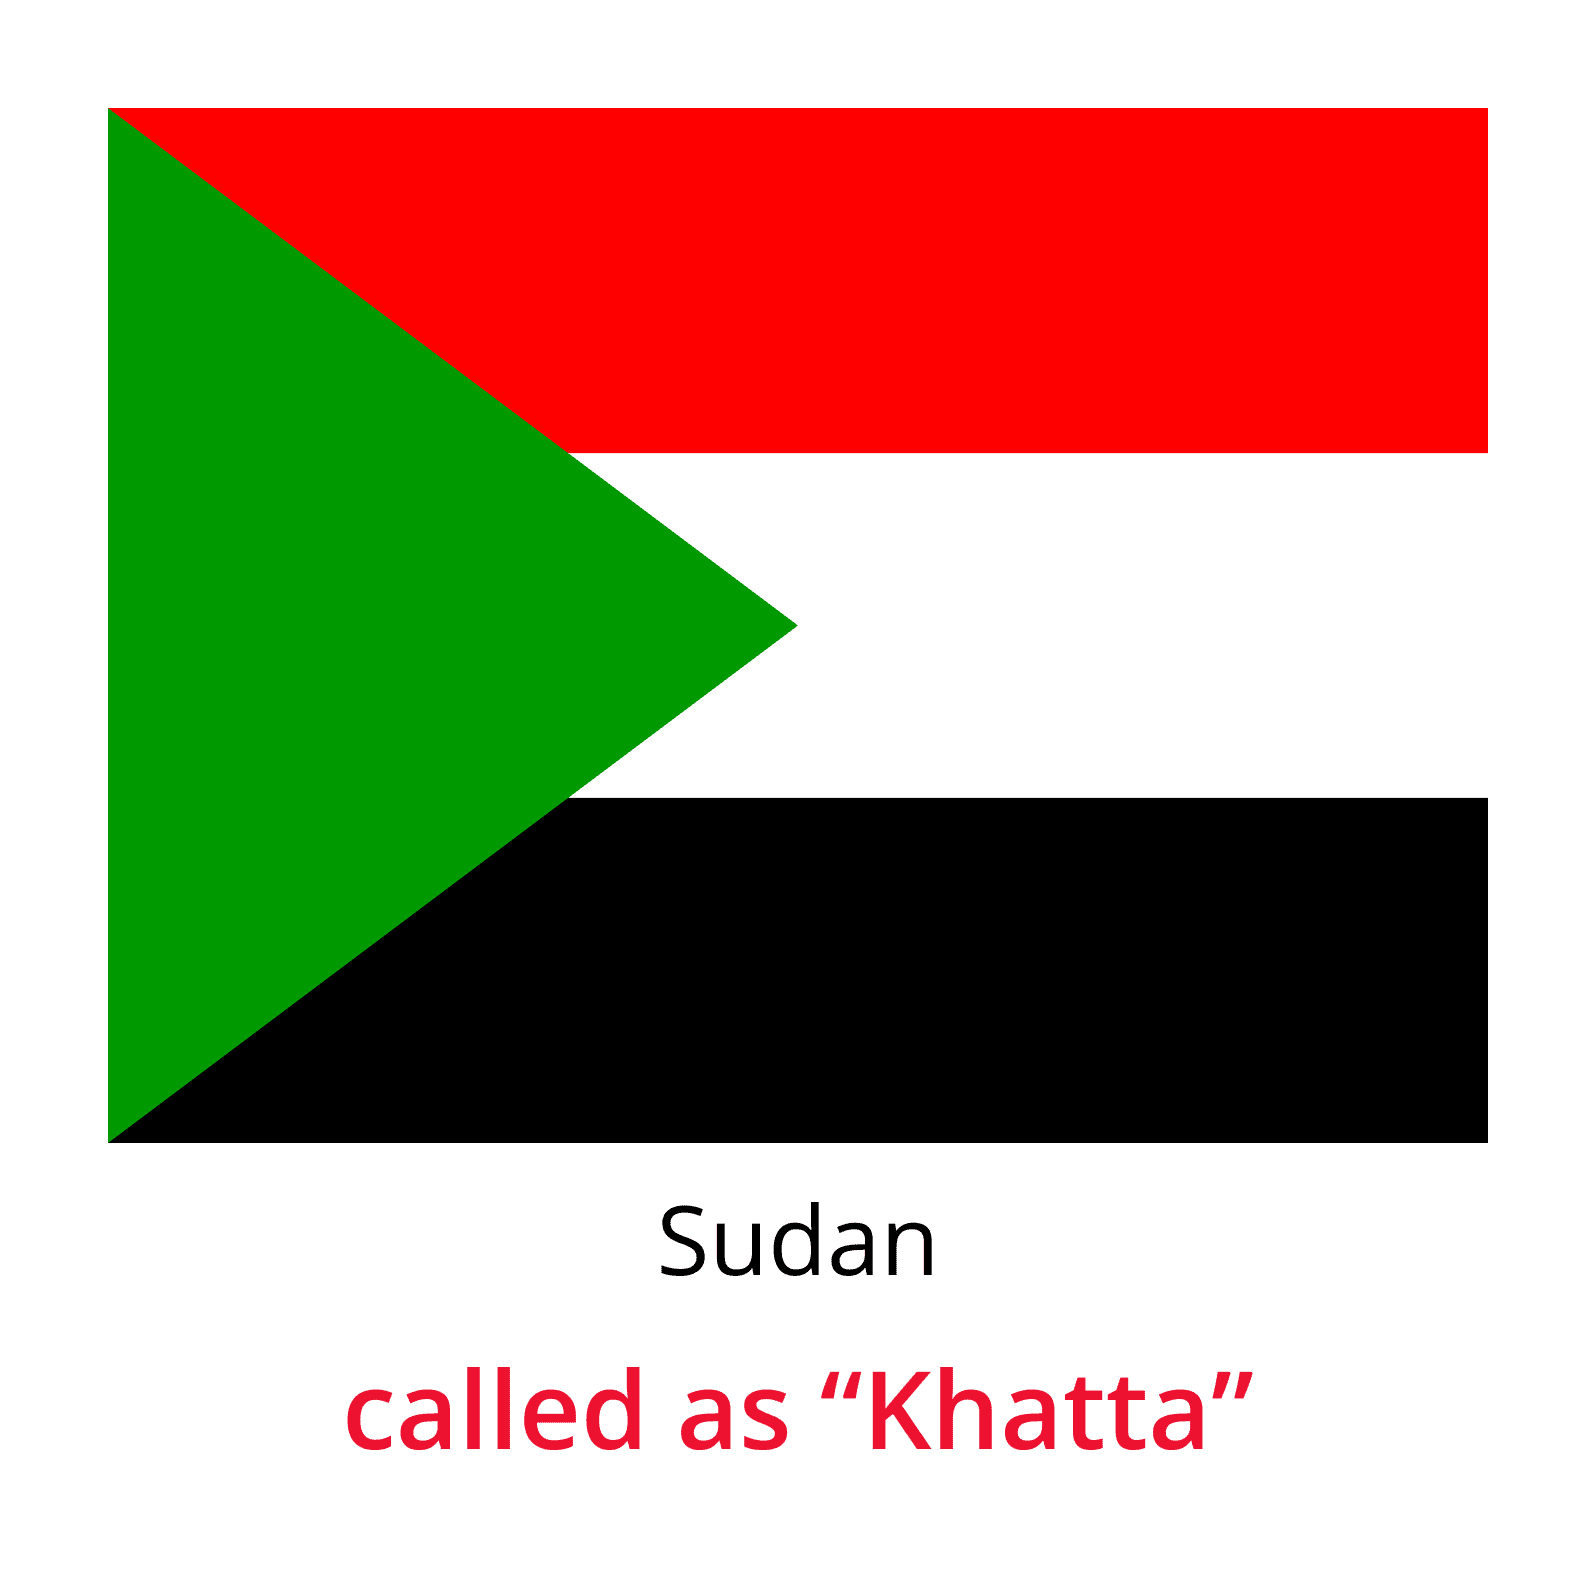 Chit fund Globally-Sudan